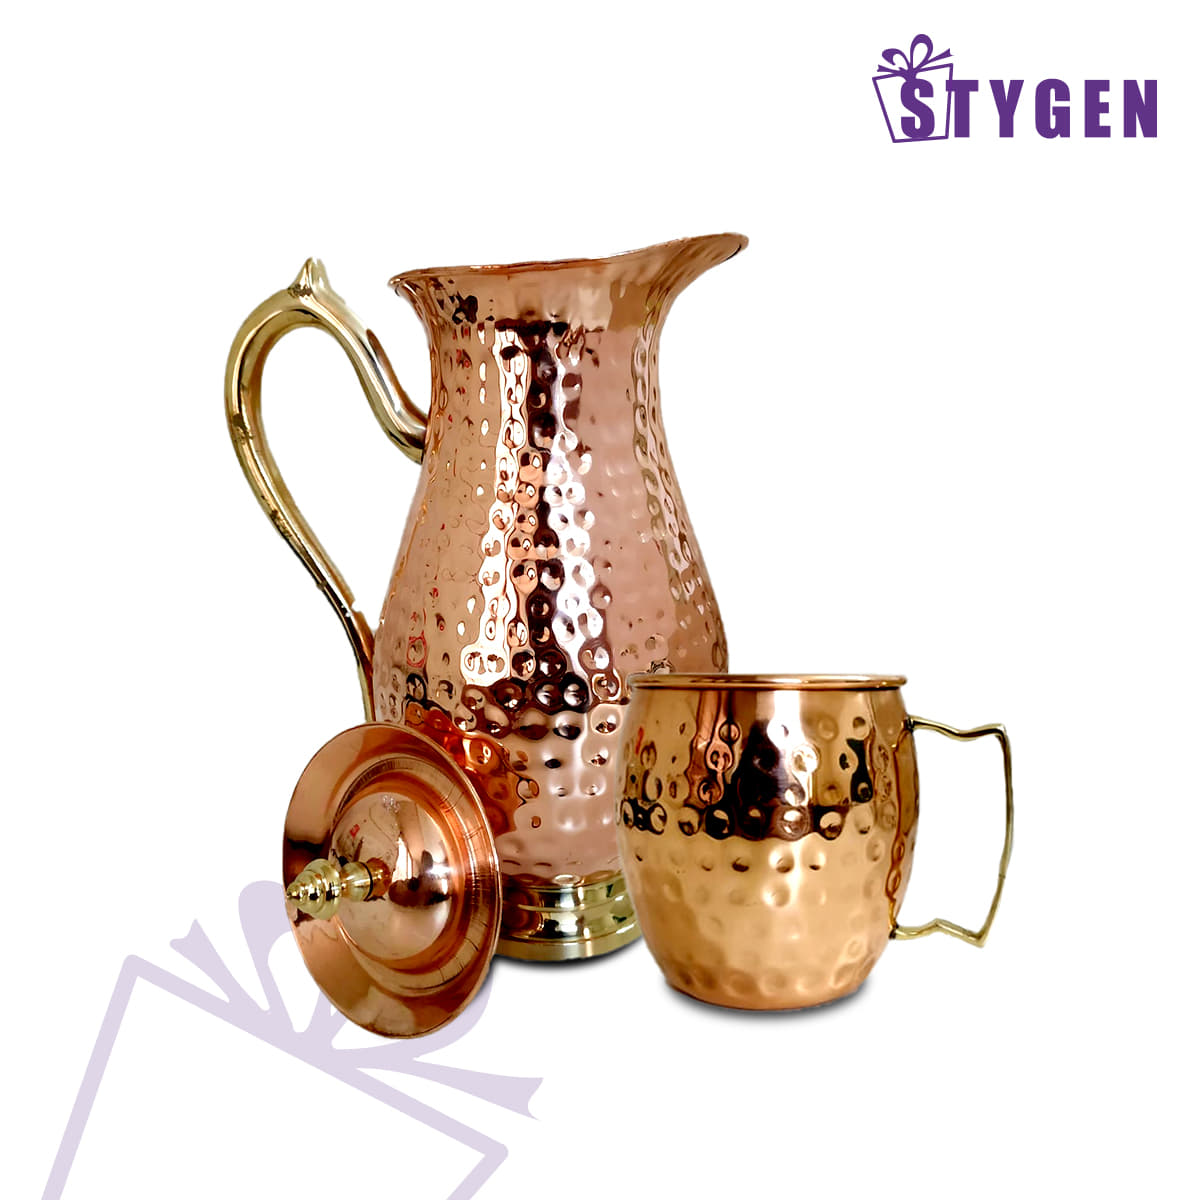 Copper Jug Mug Set (তামার জগ মগ সেট)